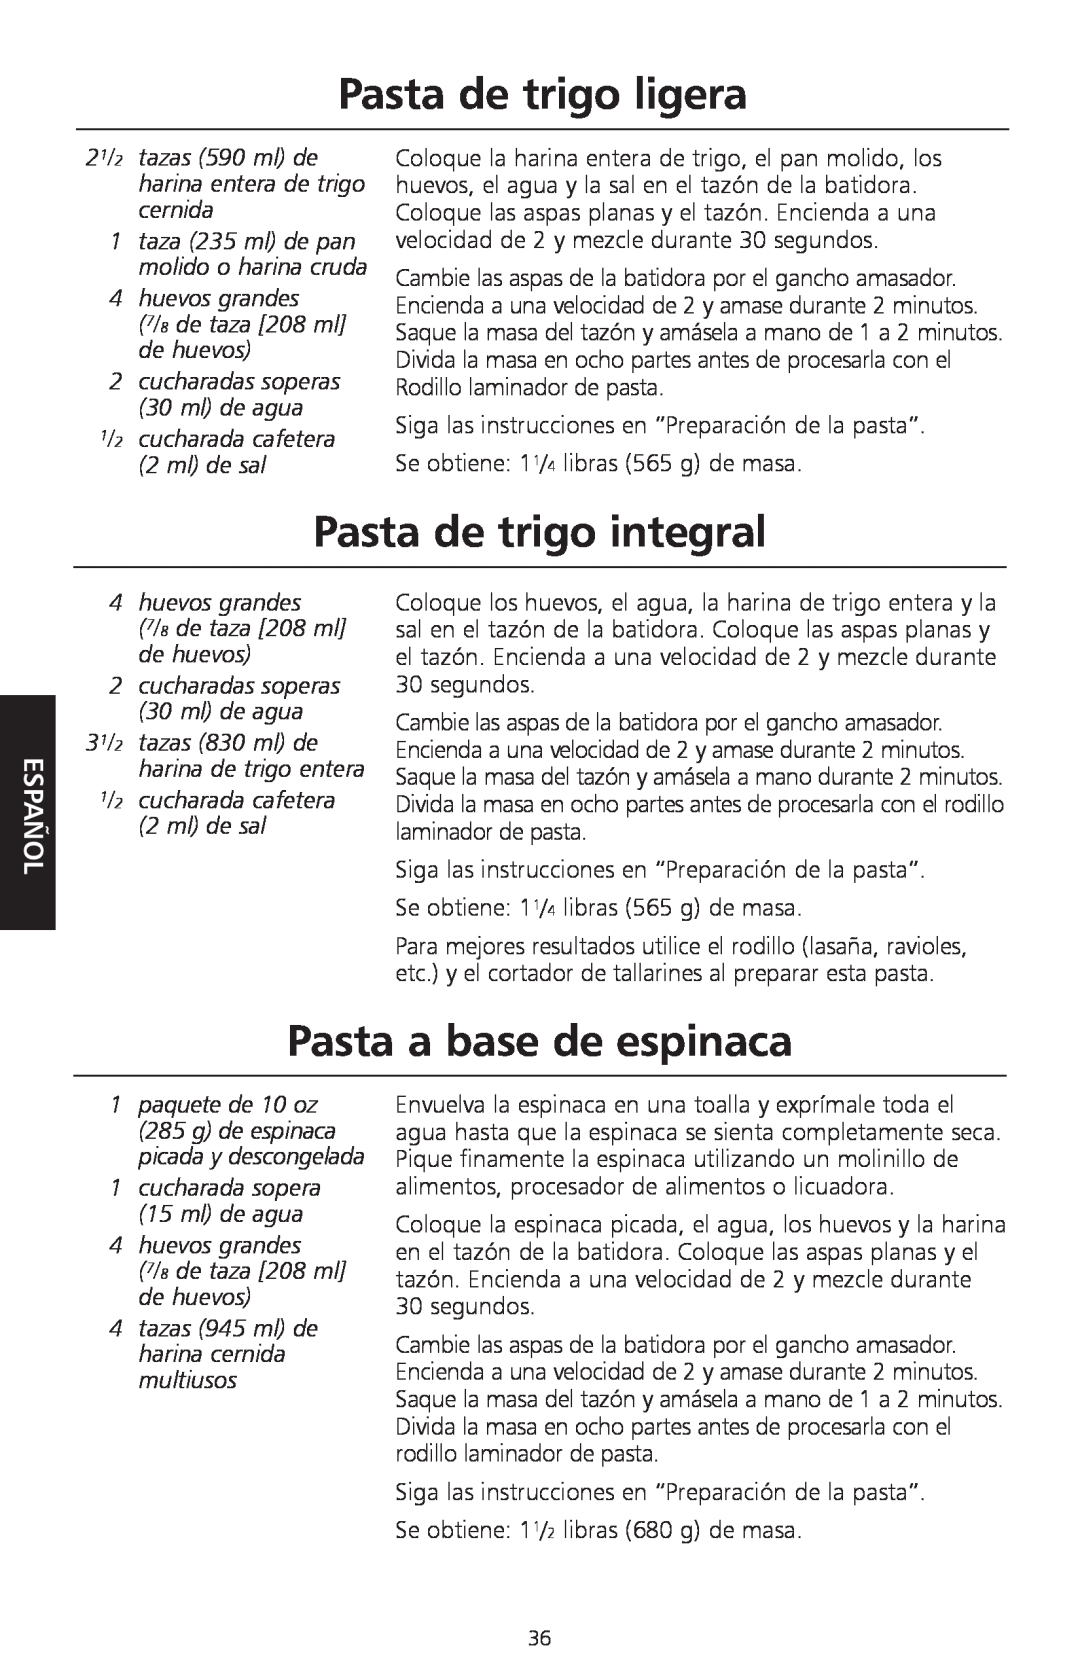 KitchenAid KPEX manual Pasta de trigo ligera, Pasta de trigo integral, Pasta a base de espinaca, paquete de 10 oz, Español 